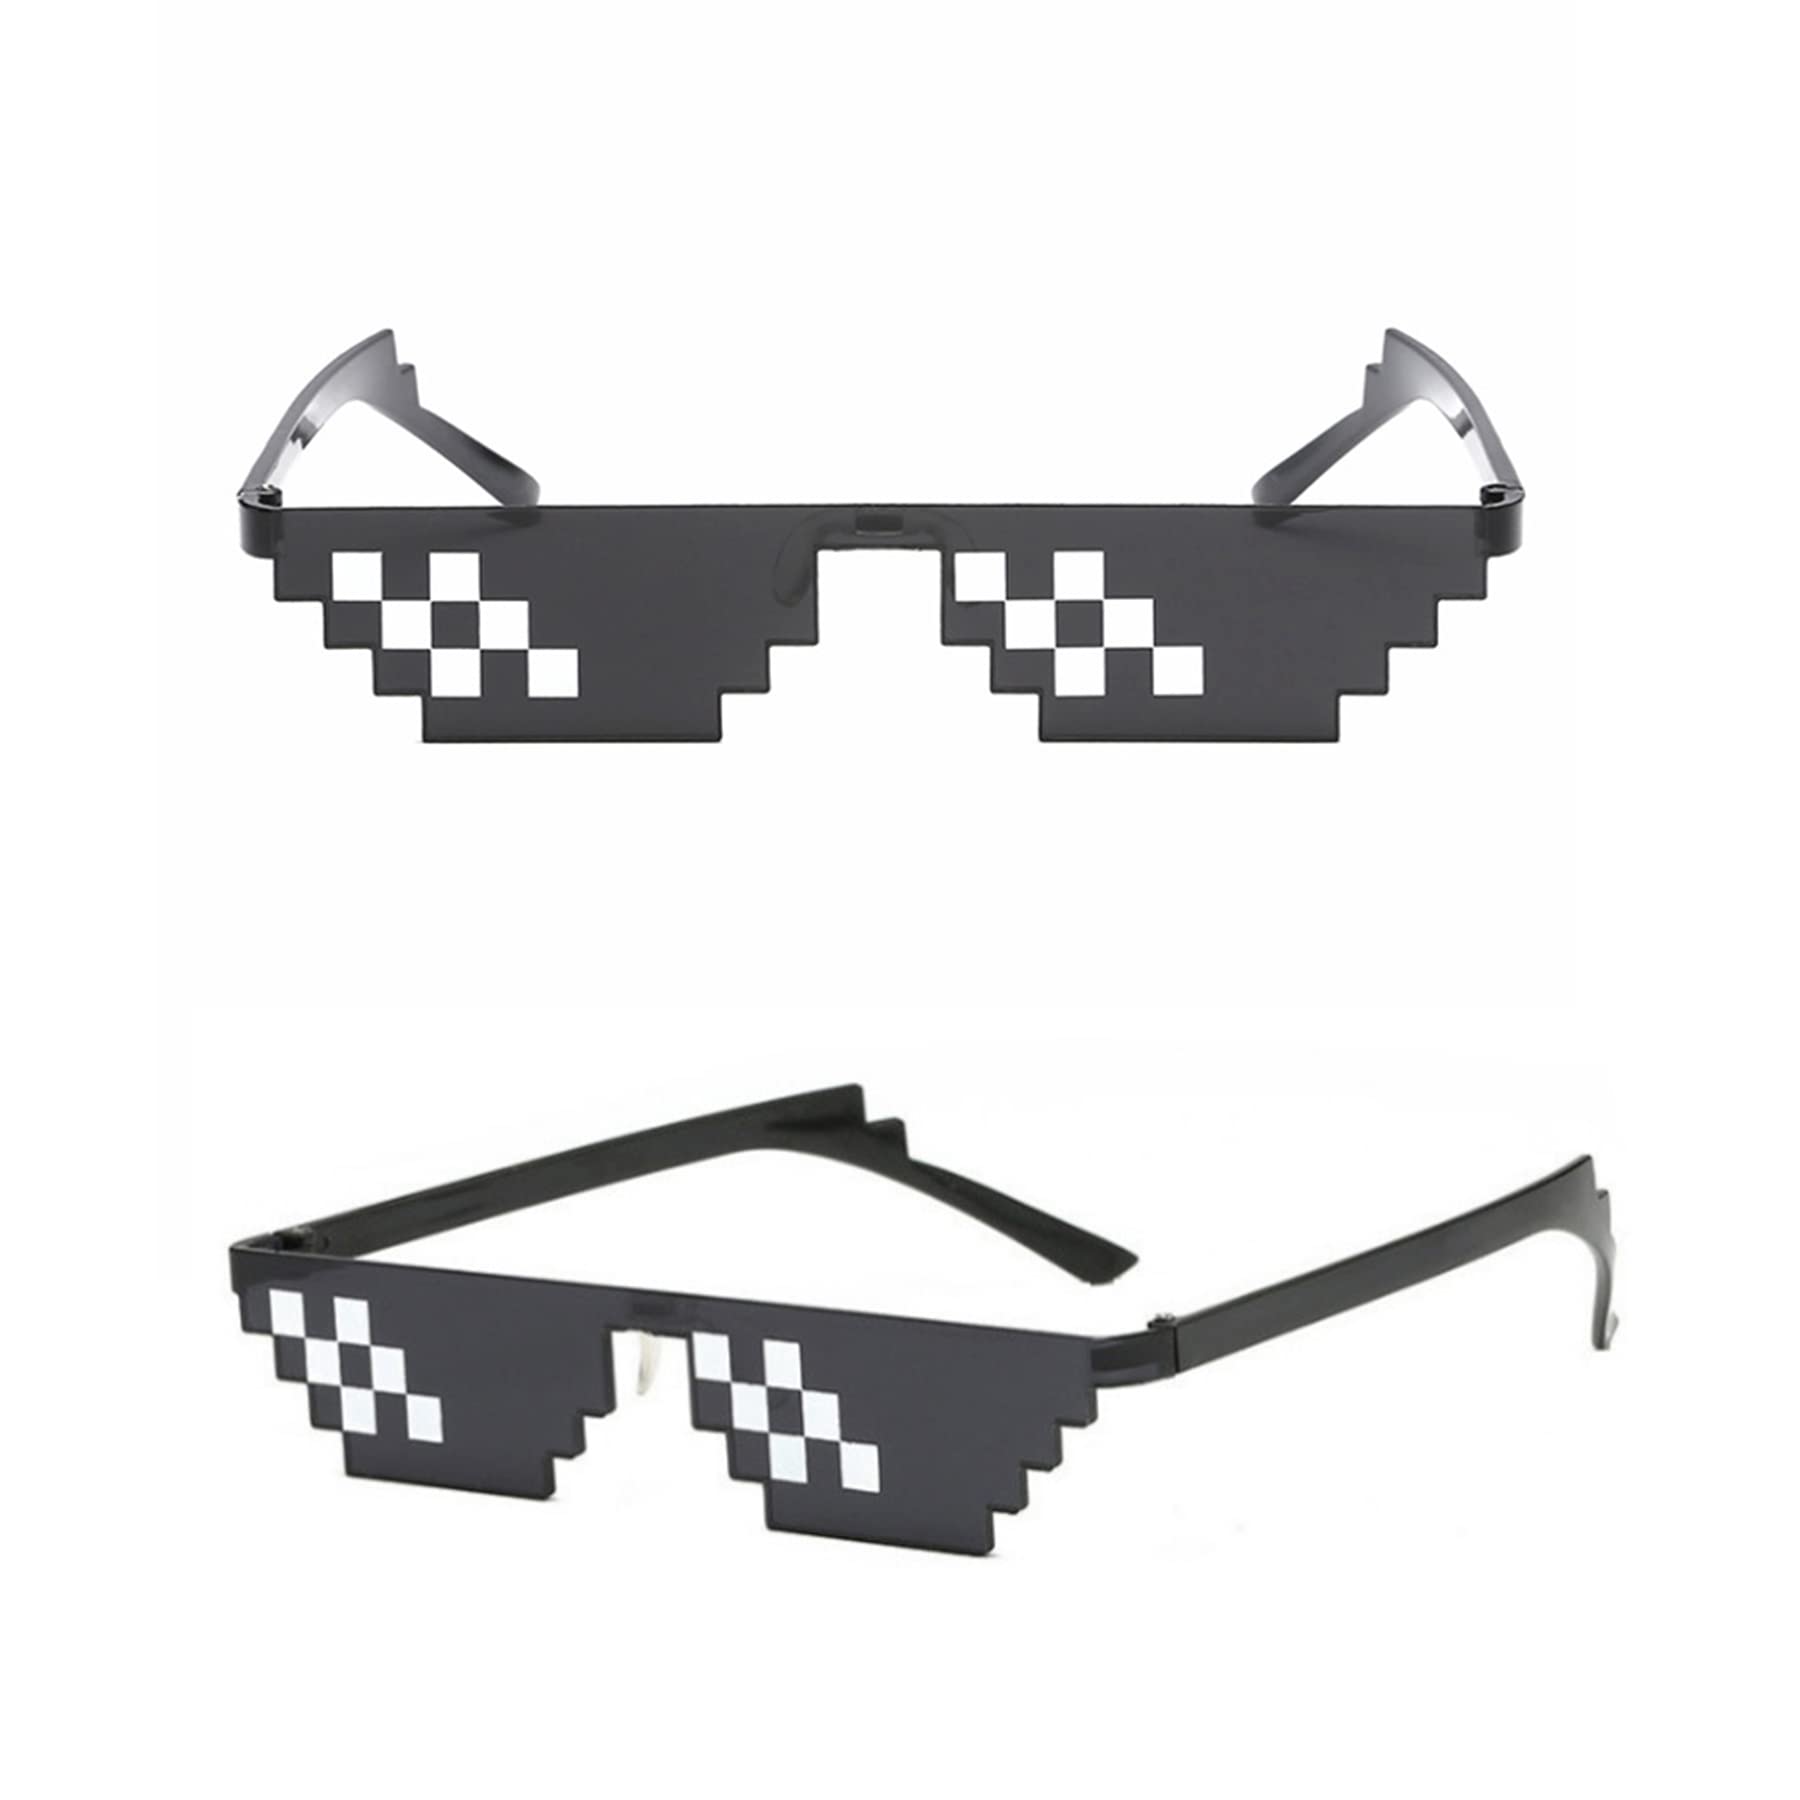 Yilistore Thug Life Sunglasses Halloween Dress Up Pixelated Mosaic Glasses,Party Glasses MLG Shades (Black A)